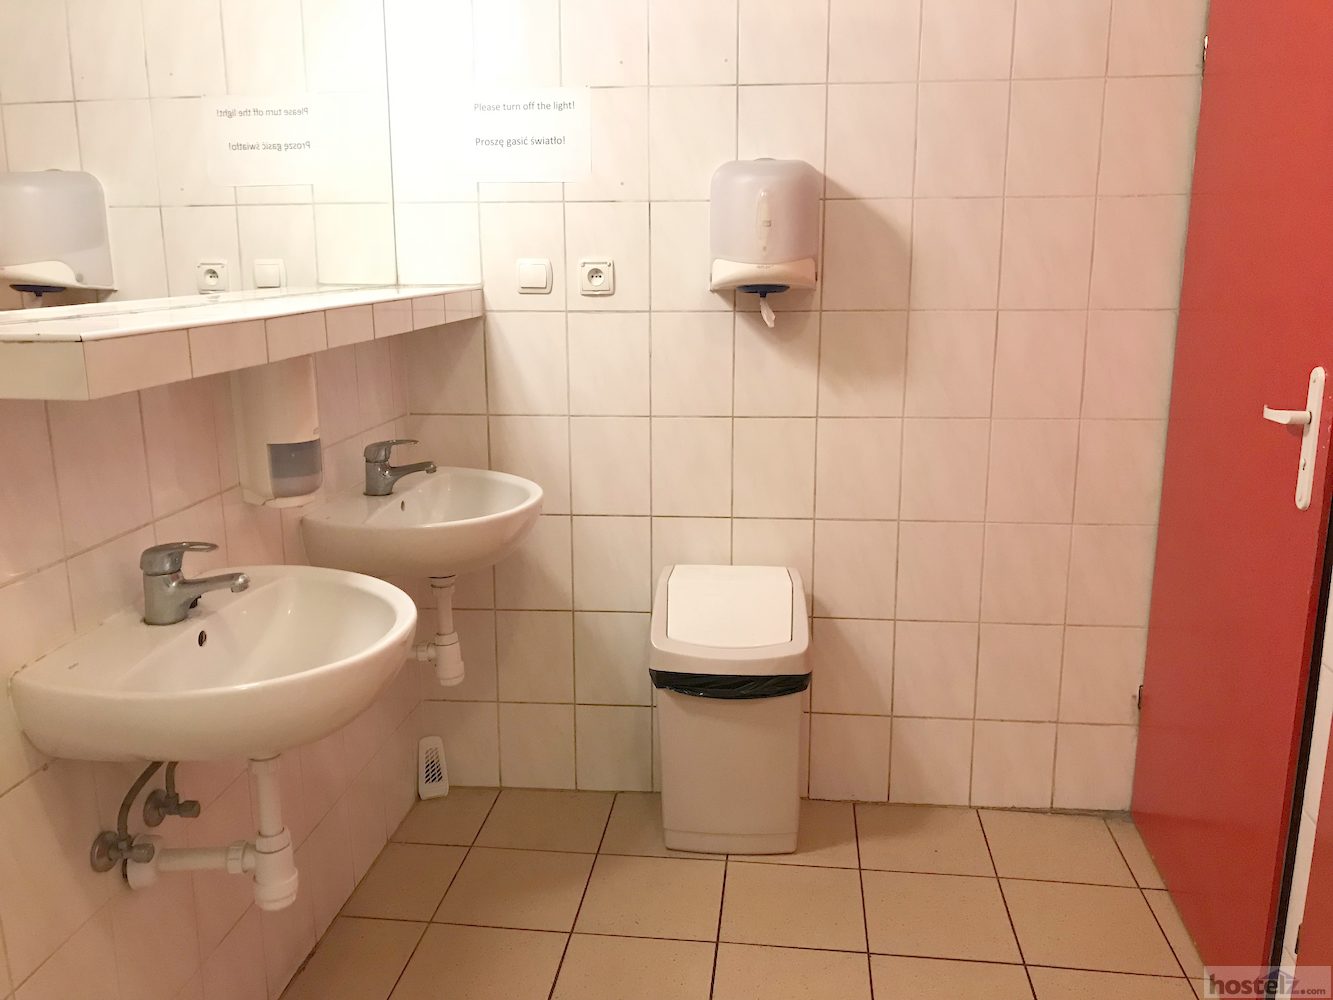 Toilet area